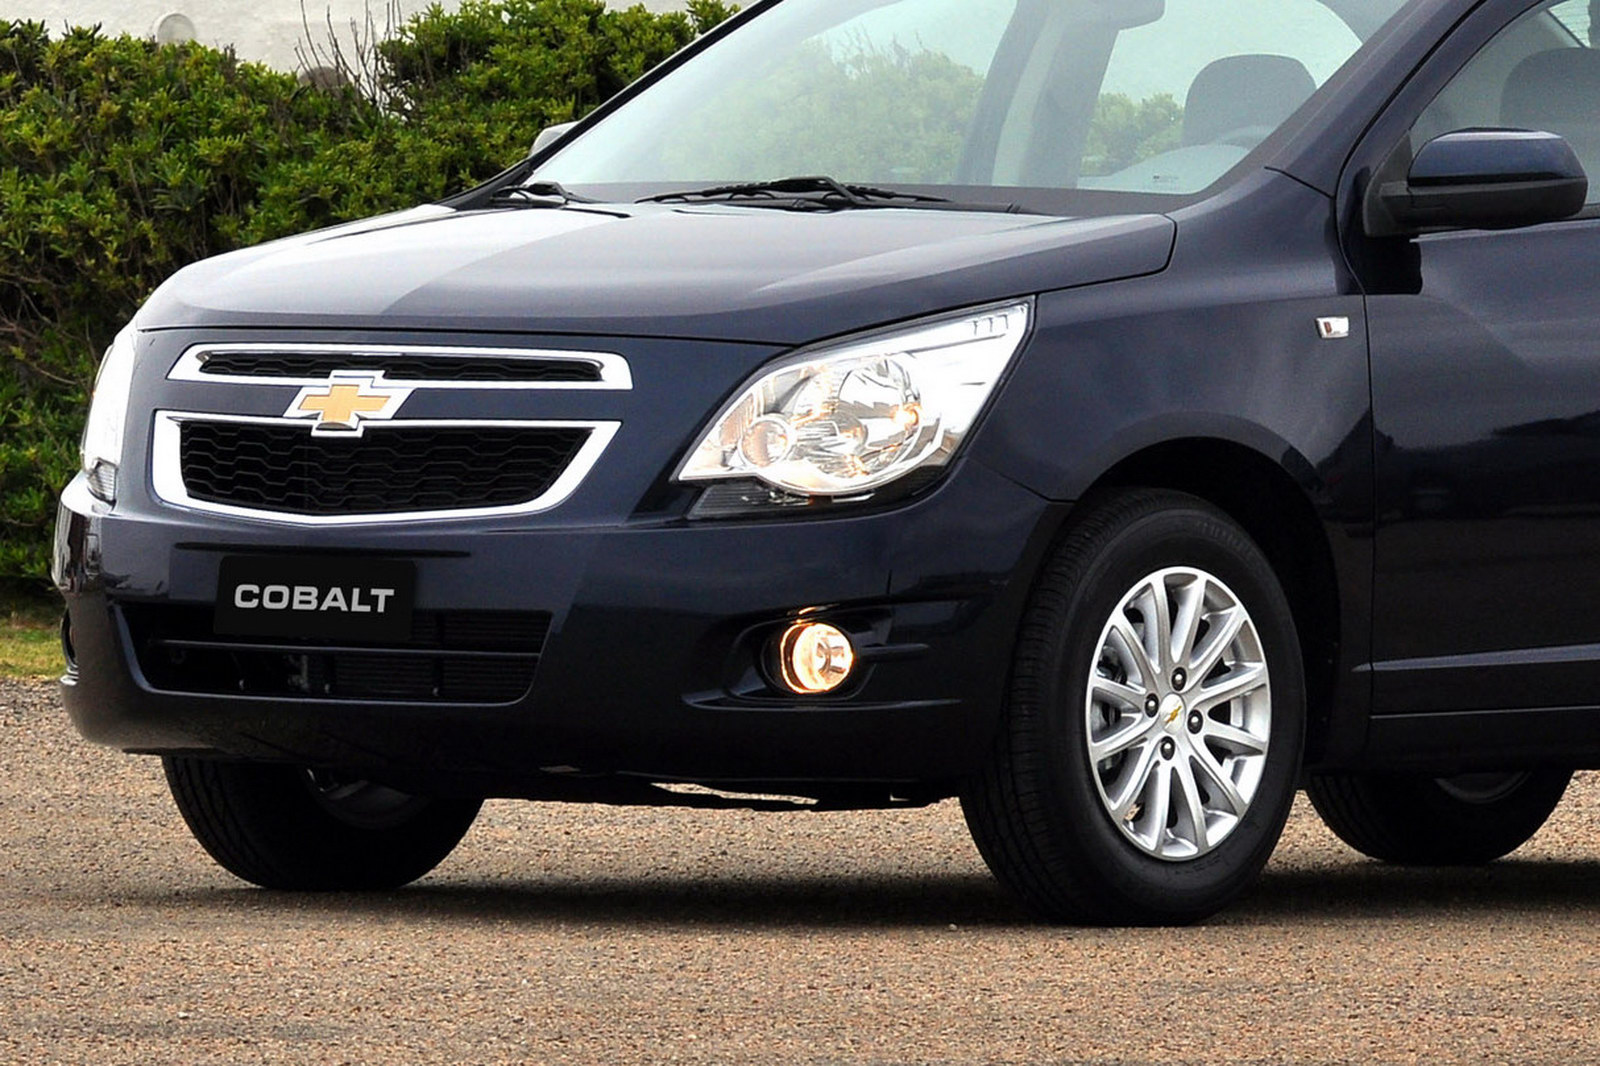 Chevrolet Cobalt 2012, foto ufficiali